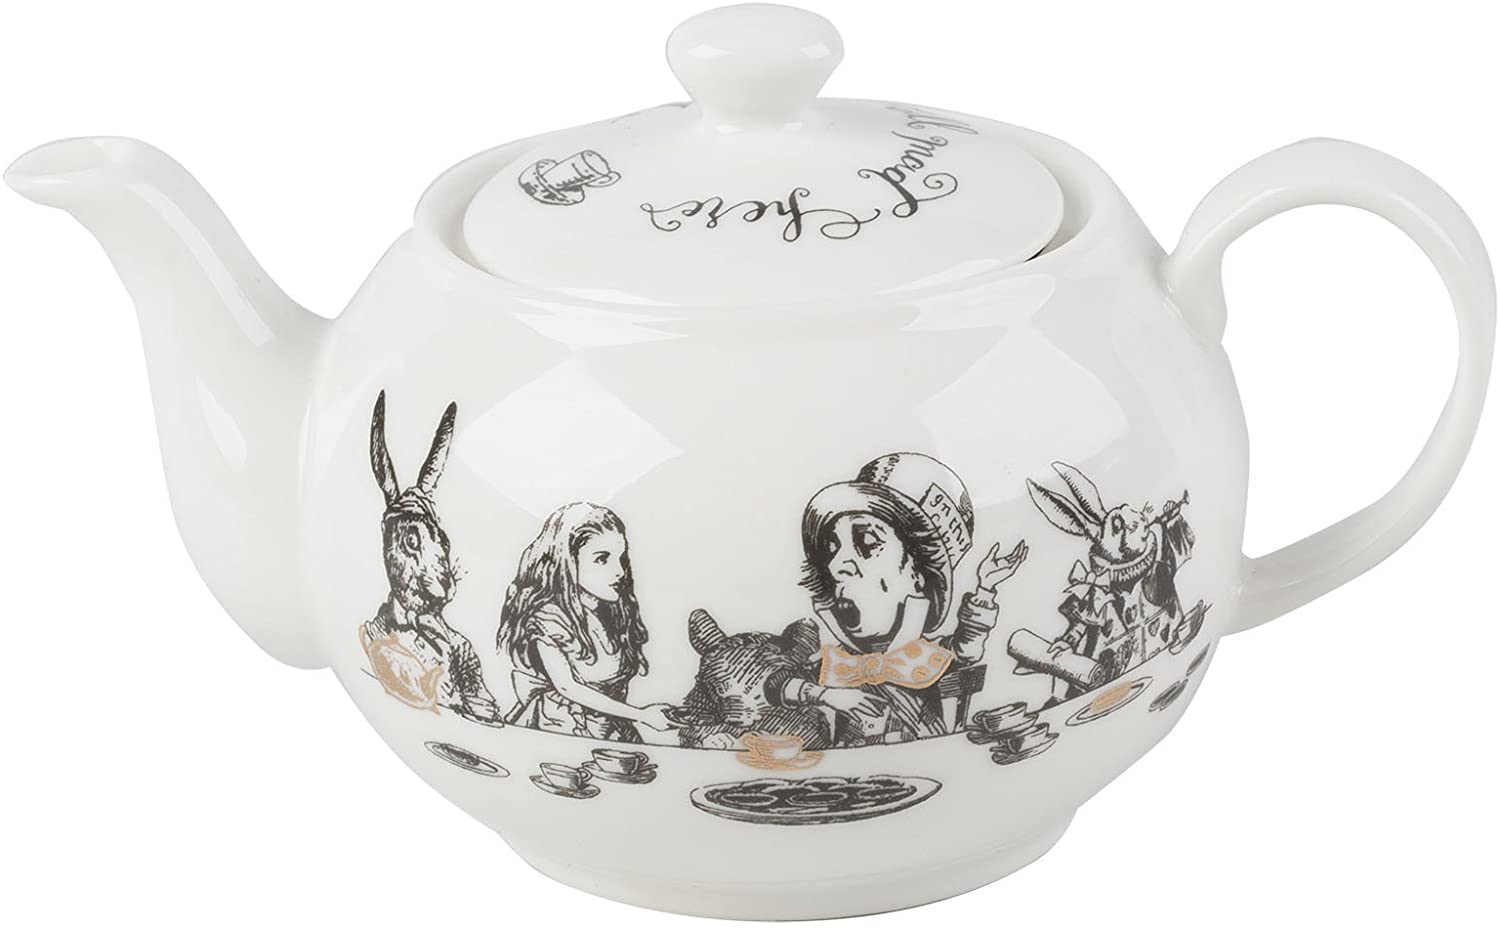 CREATIVE TOPS V&A Alice in Wonderland Teapot, Jug for Serving Tea, Water Carafe, Jug with Lid, Artfully Painted Design Ceramic, 450 ml